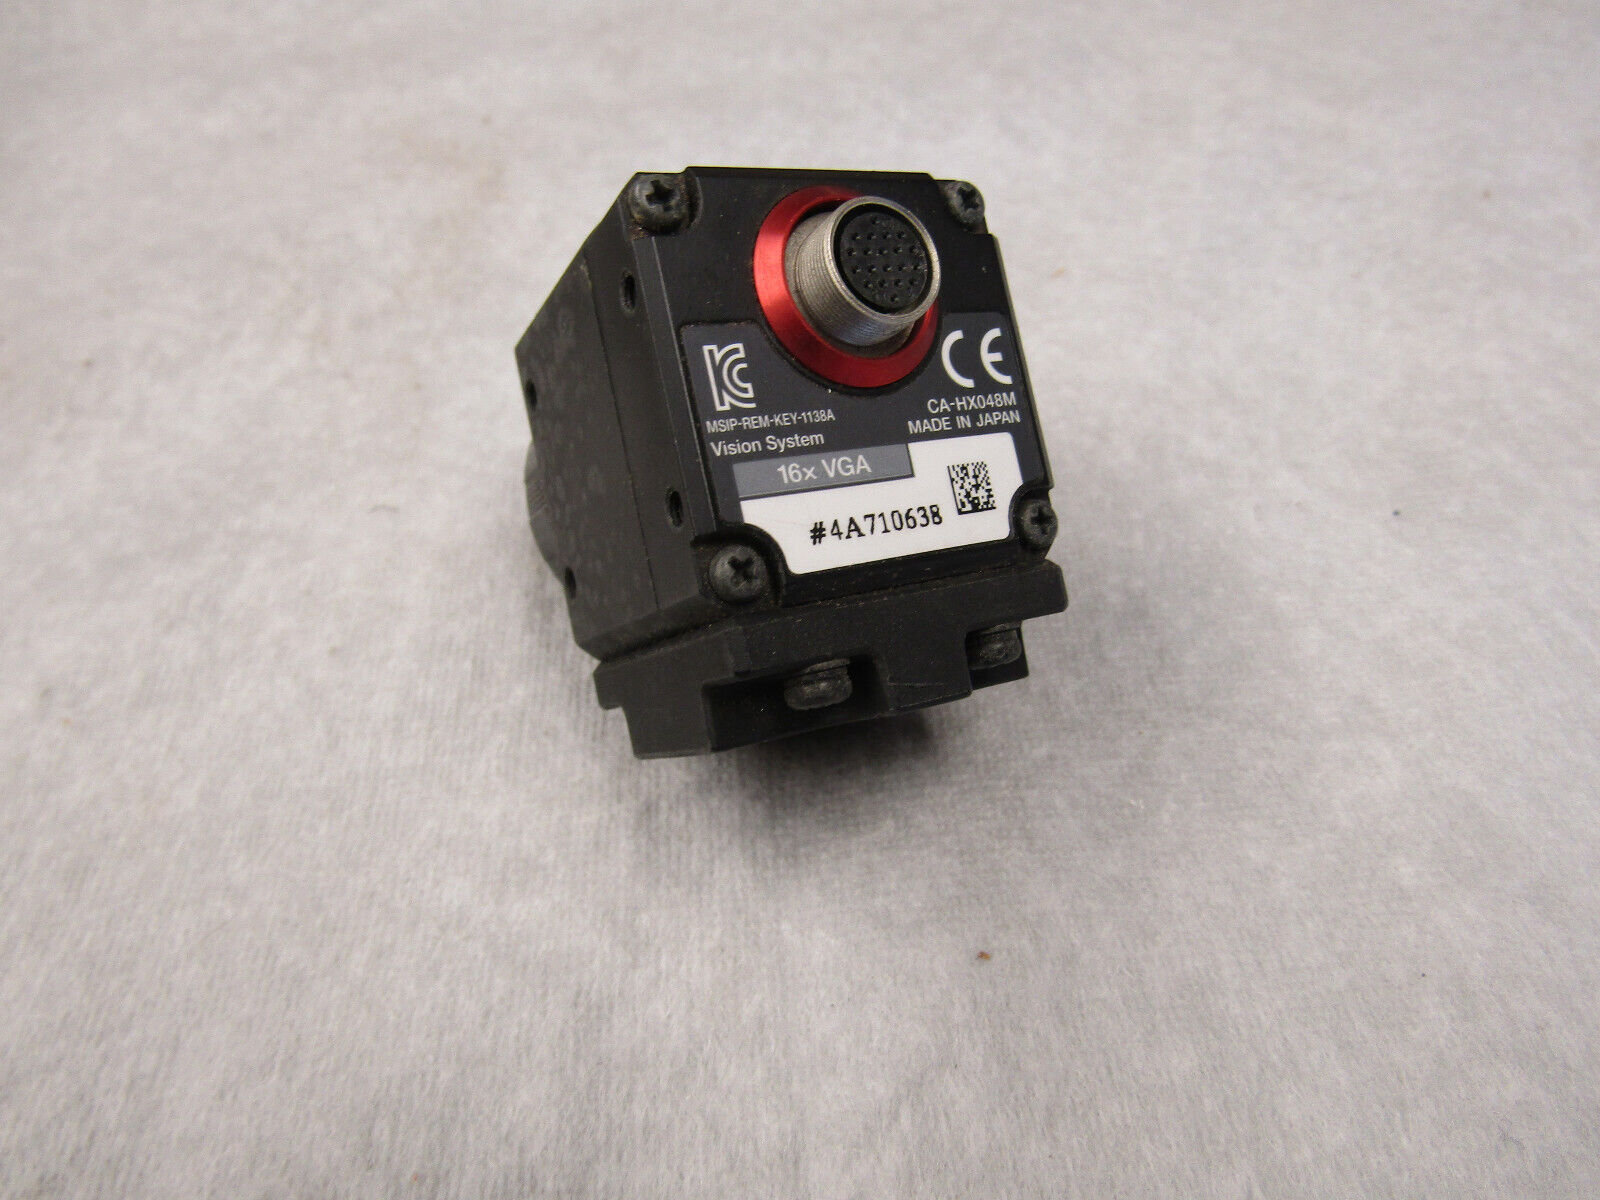 Keyence CA-HX048M Monochrome machine vision camera